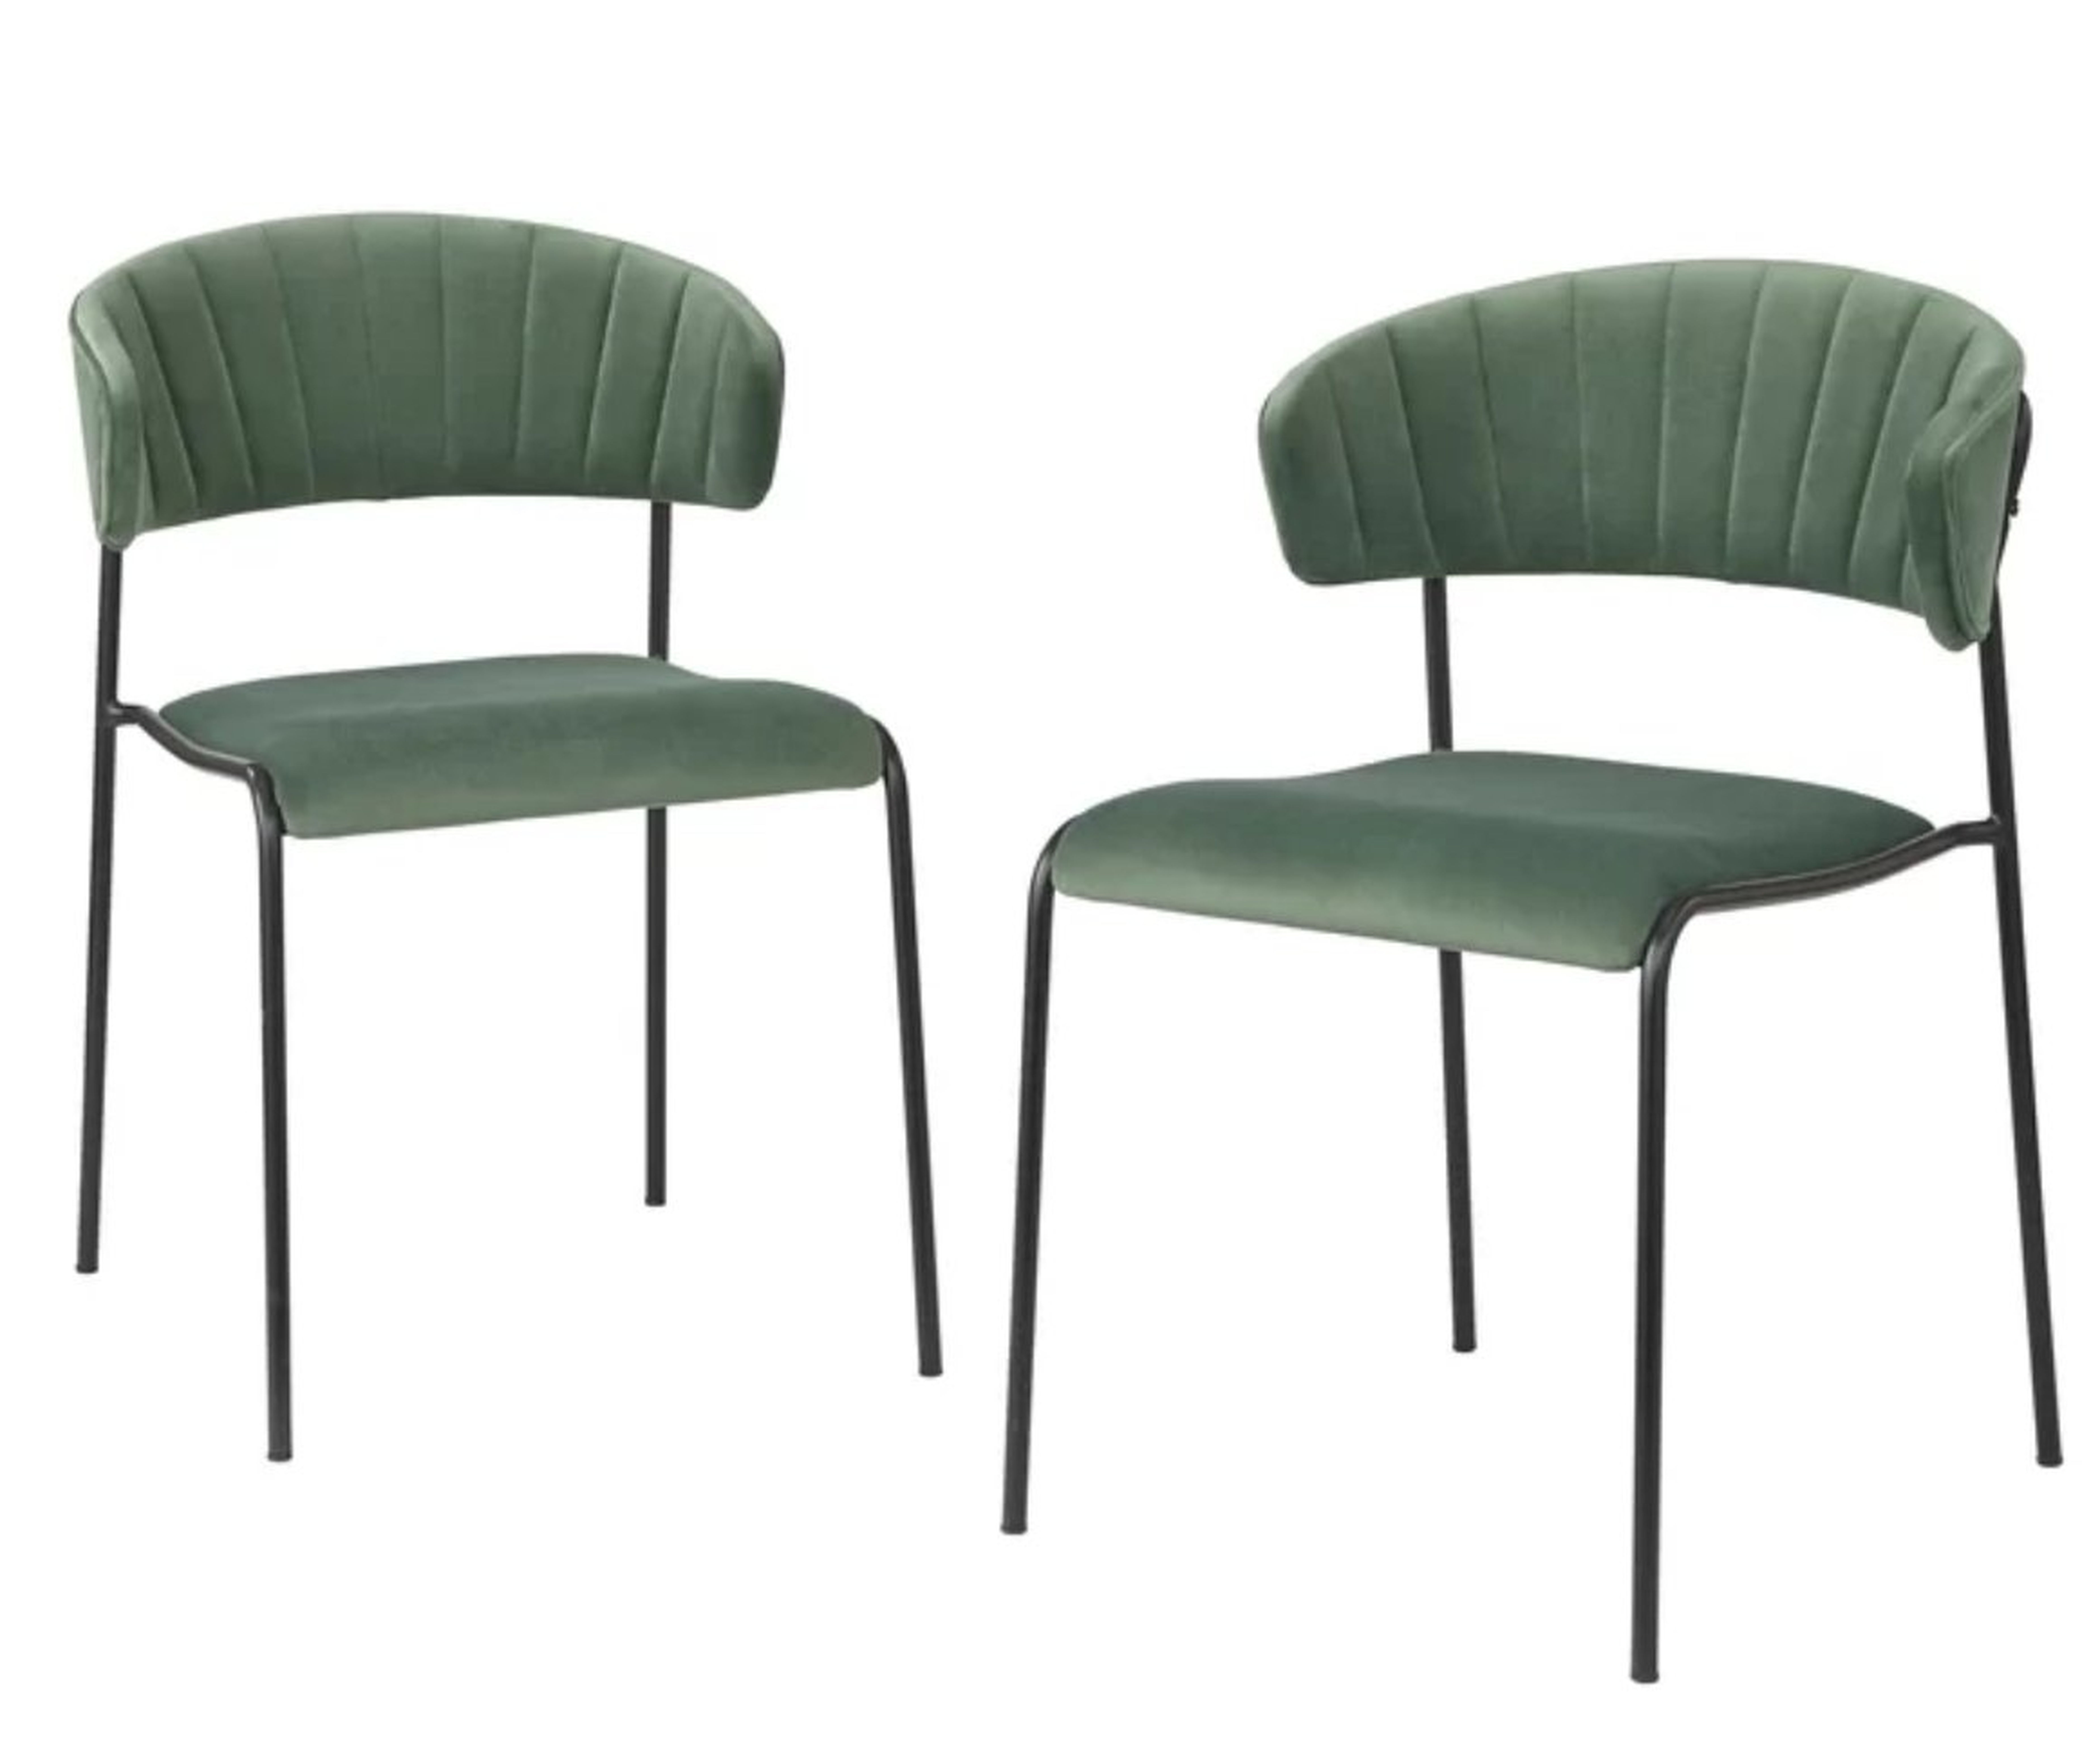 Caistor Upholstered Dining Chair (set of 2) - Wayfair